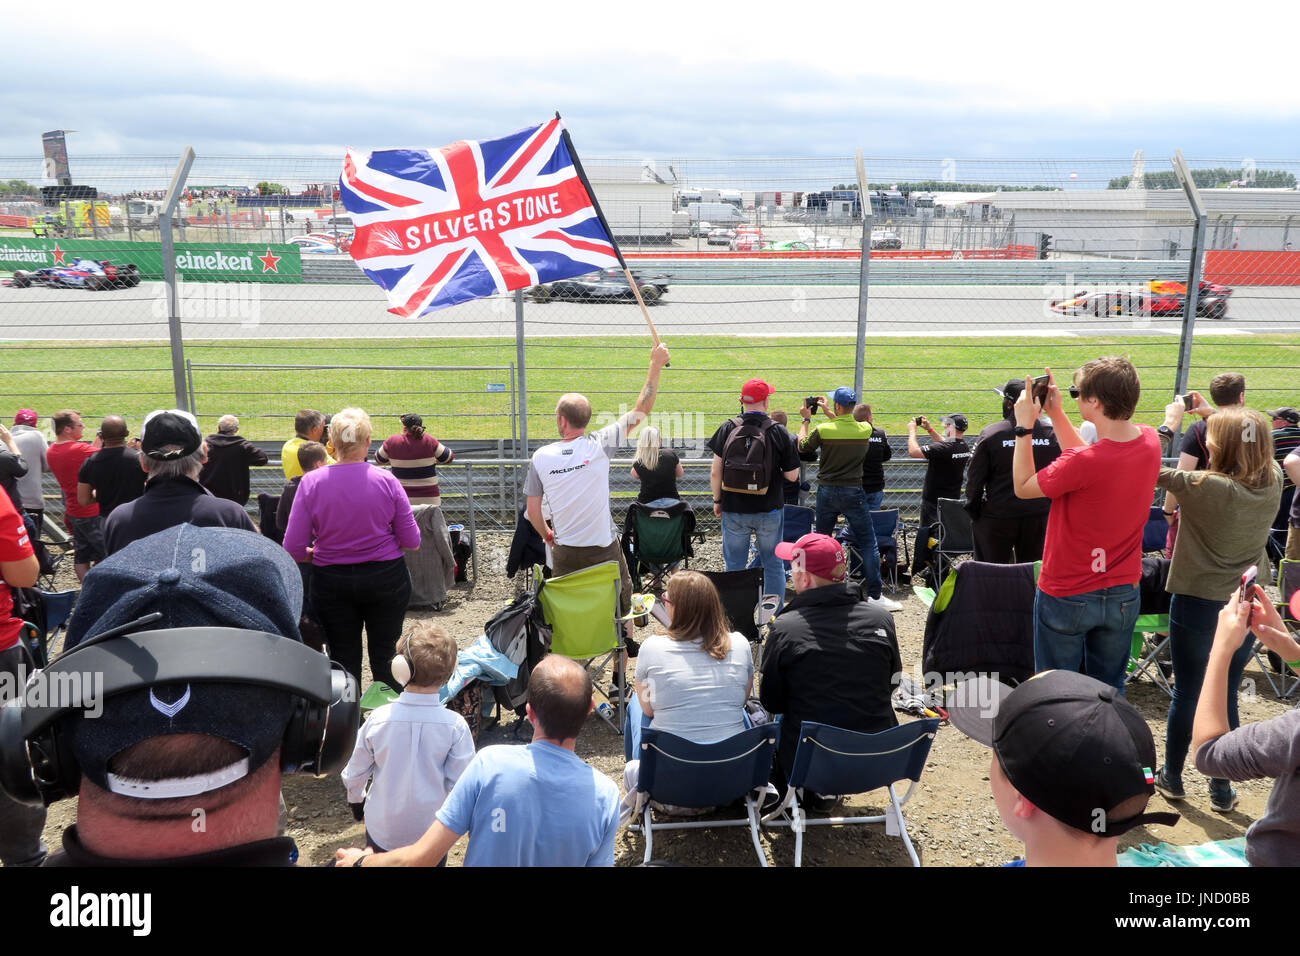 Silverstone bandiera in Formula1 circuito racing Foto Stock